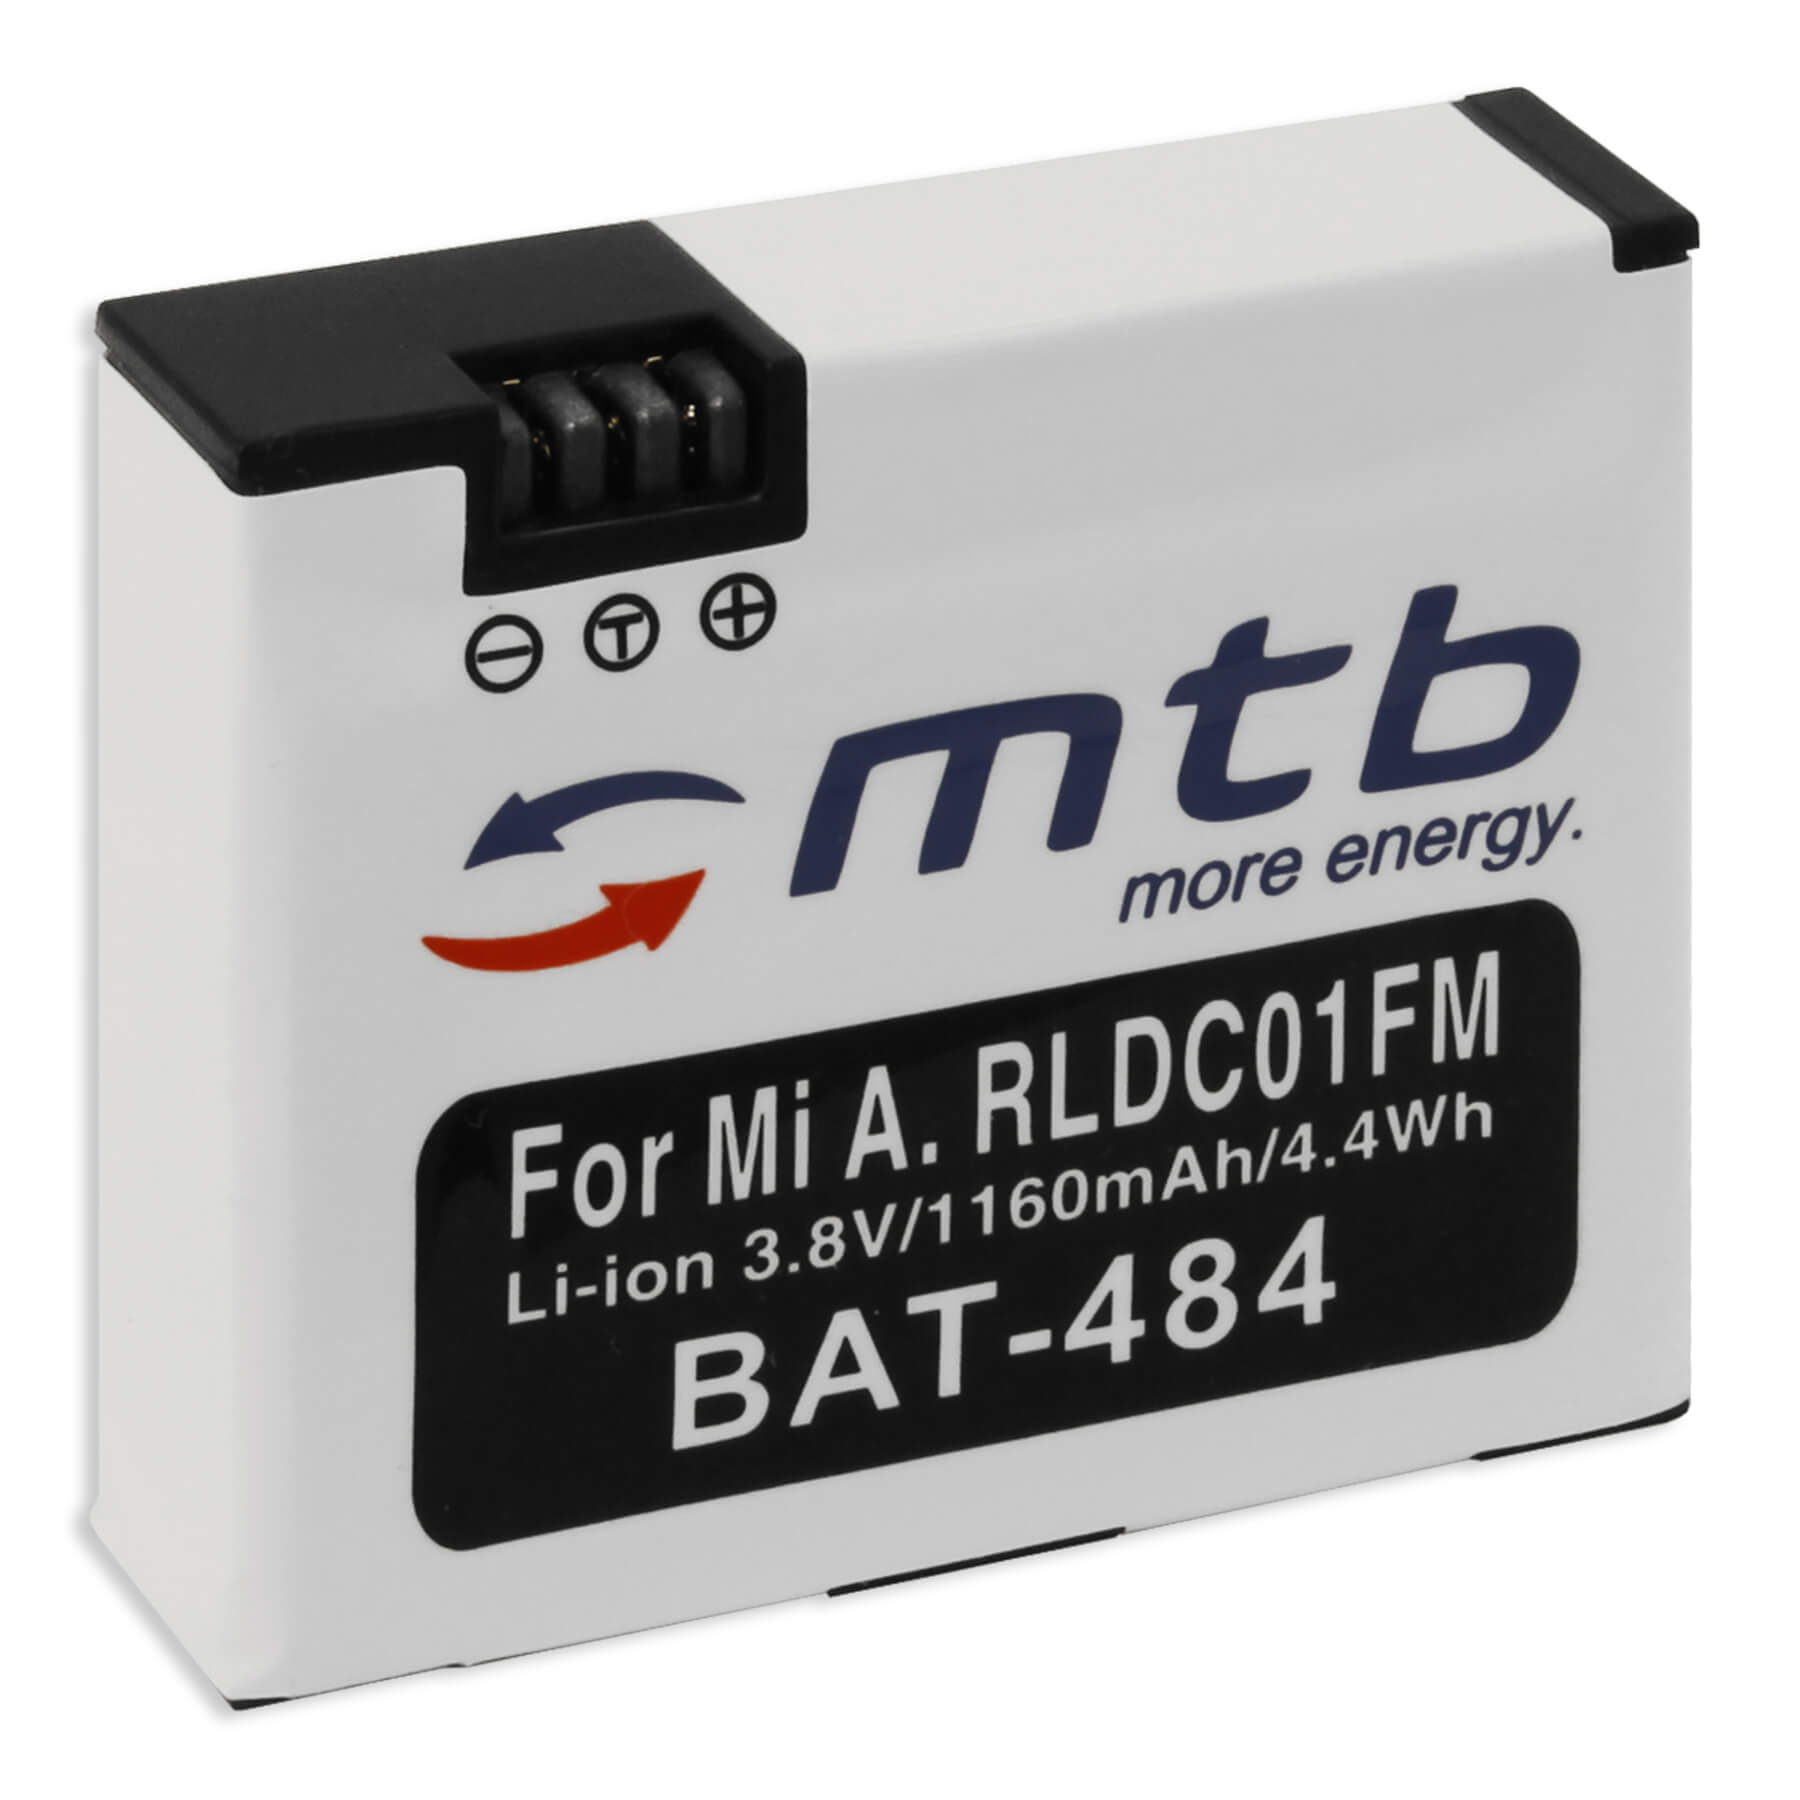 MTB MORE ENERGY BAT-484 RLDC01FM mAh Akku, 1160 Li-Ion